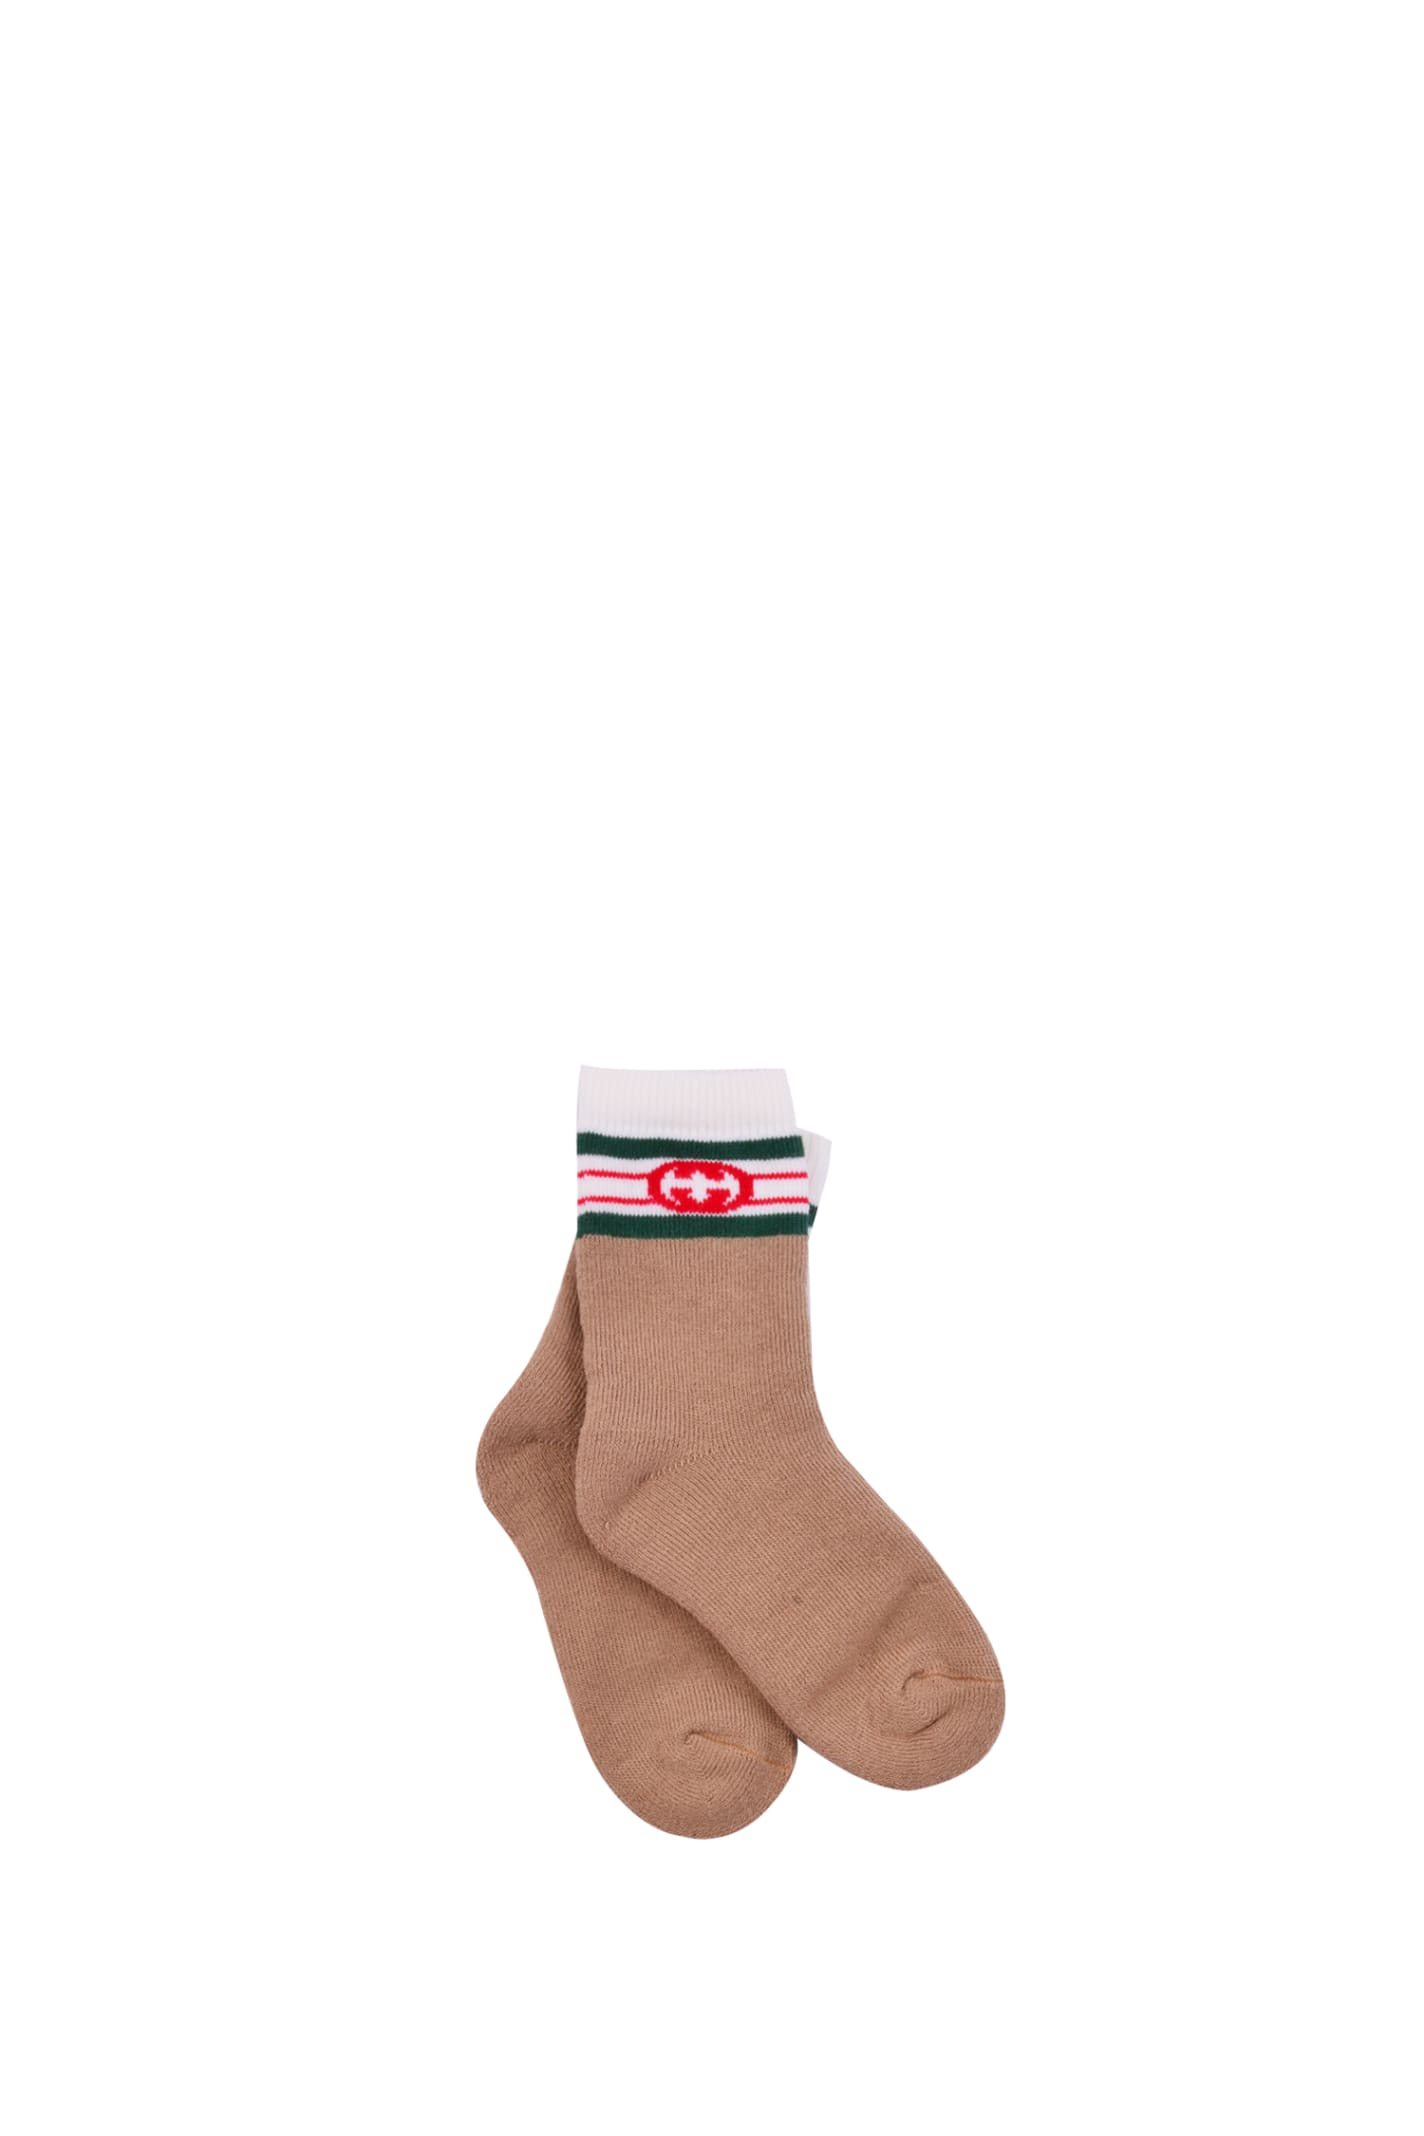 Gucci Socks With Print